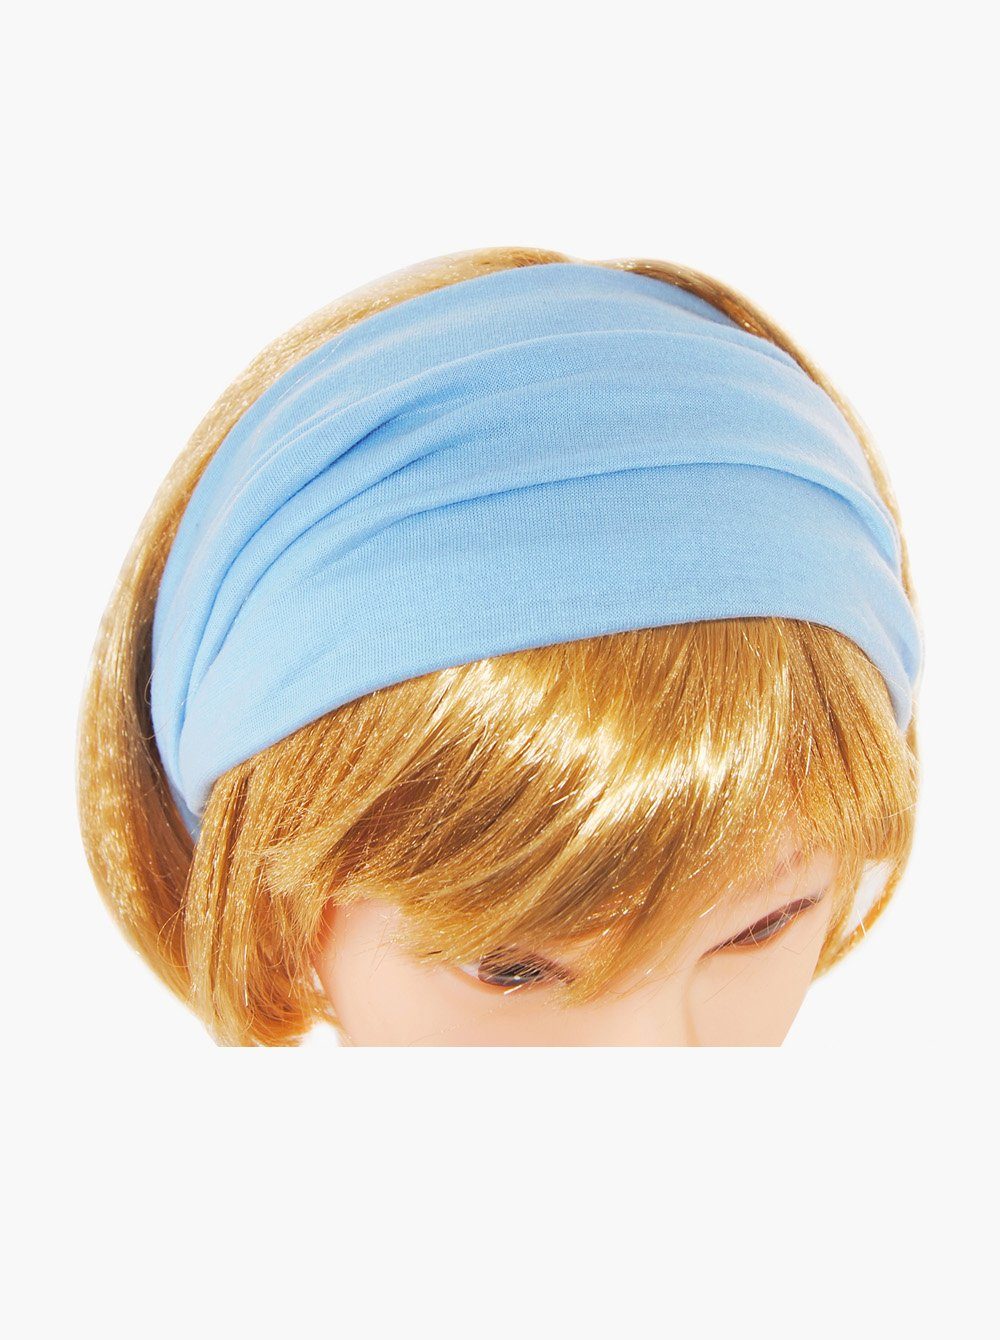 Sport Hellblau Stirnband Damen für und Haarband Hairband Kopfband, Haarband Yoga axy